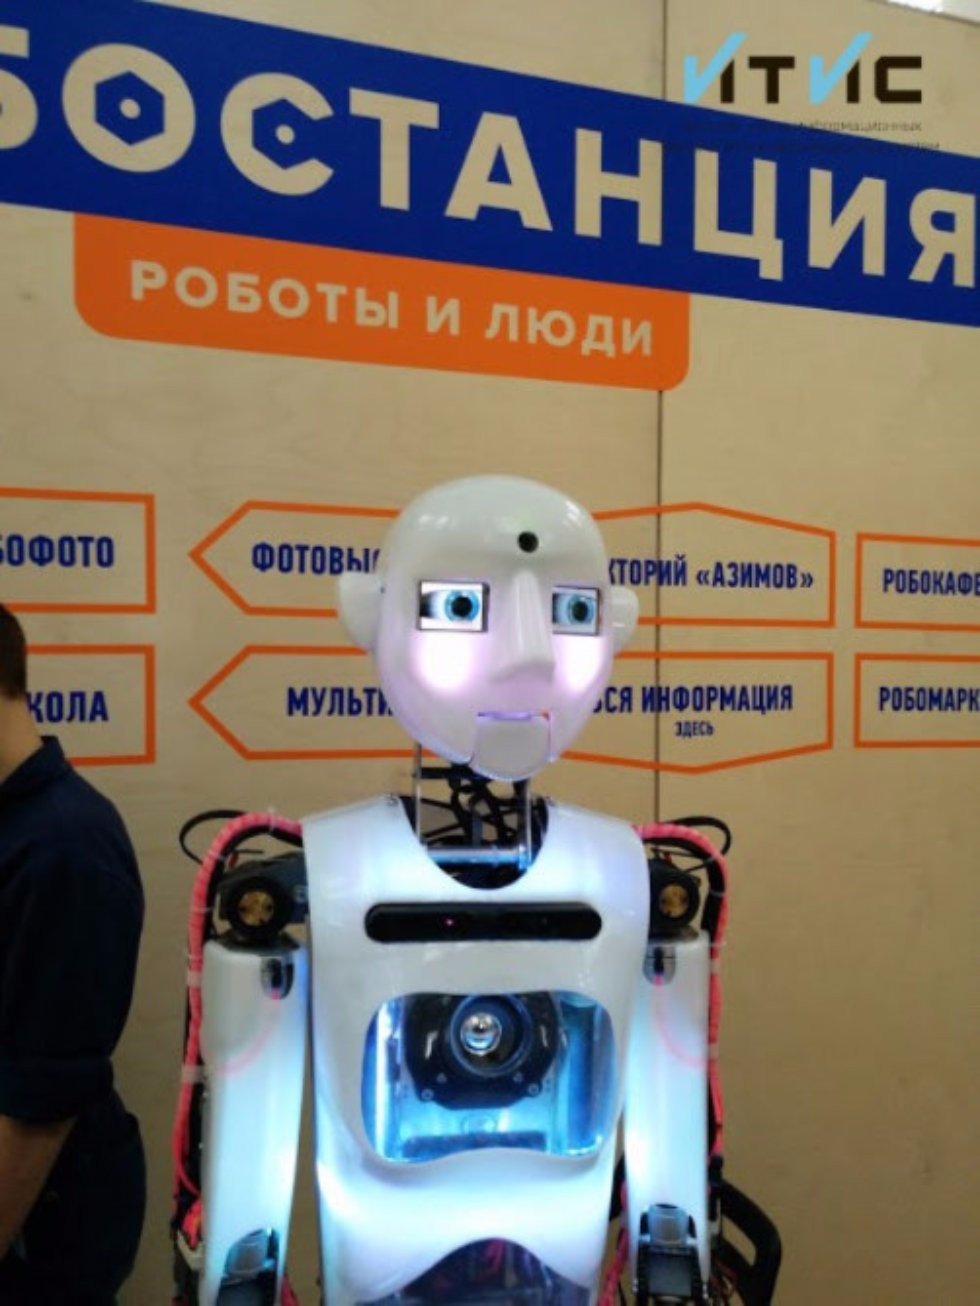 ITIS at the exhibition of robotics ,ITIS Software Engineering Department, Maxim Talanov, Robots, Robotics, IT